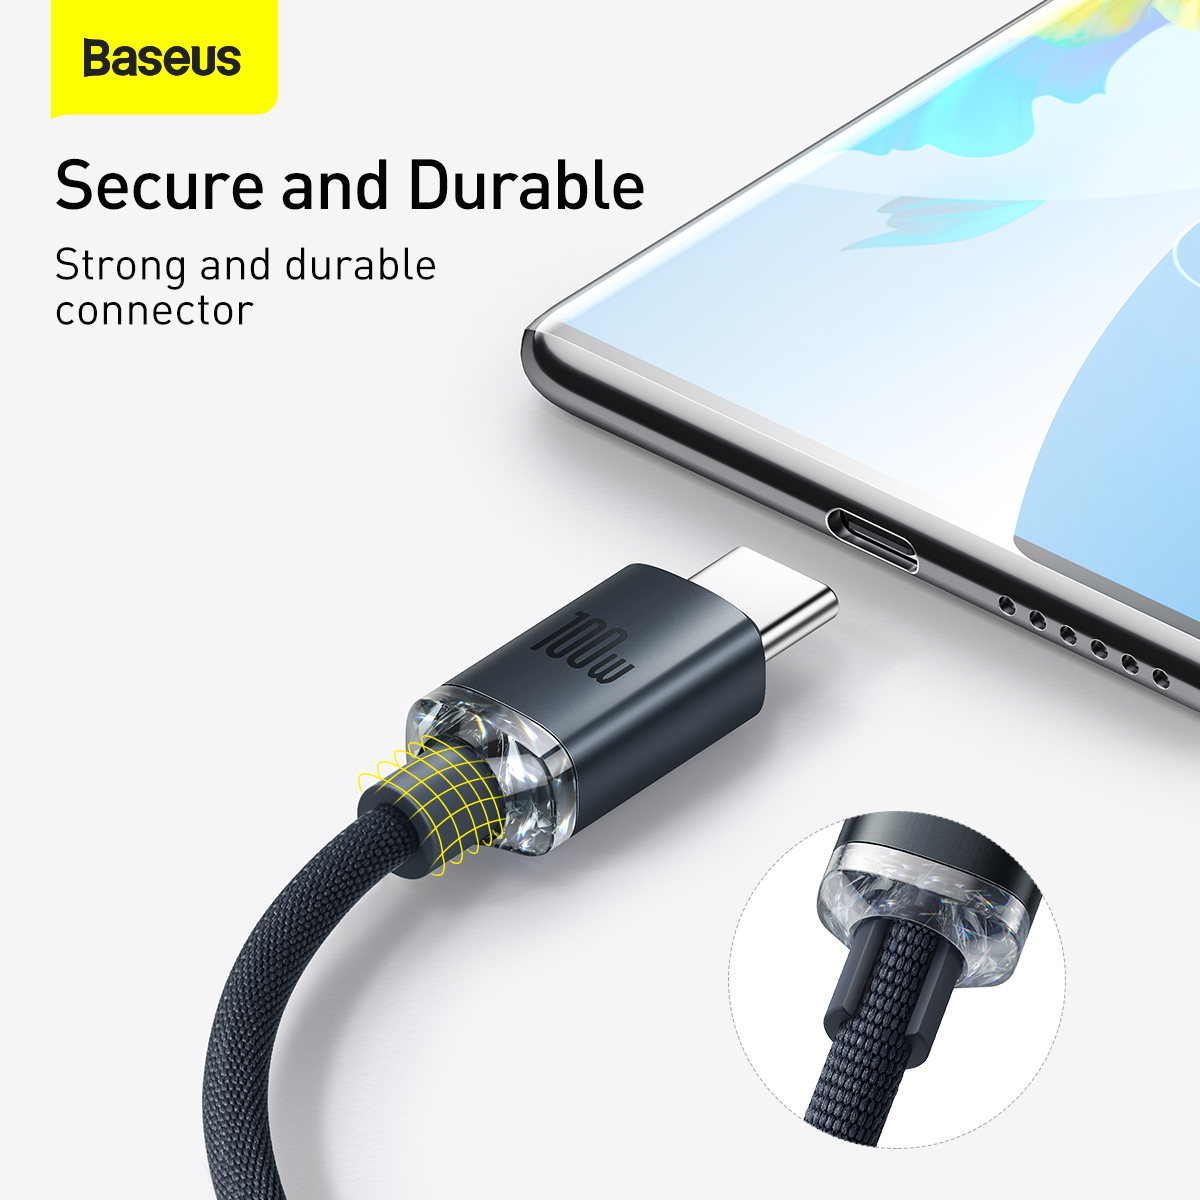 Baseus Crystal Shine USB-C kabel, 100W, 2m